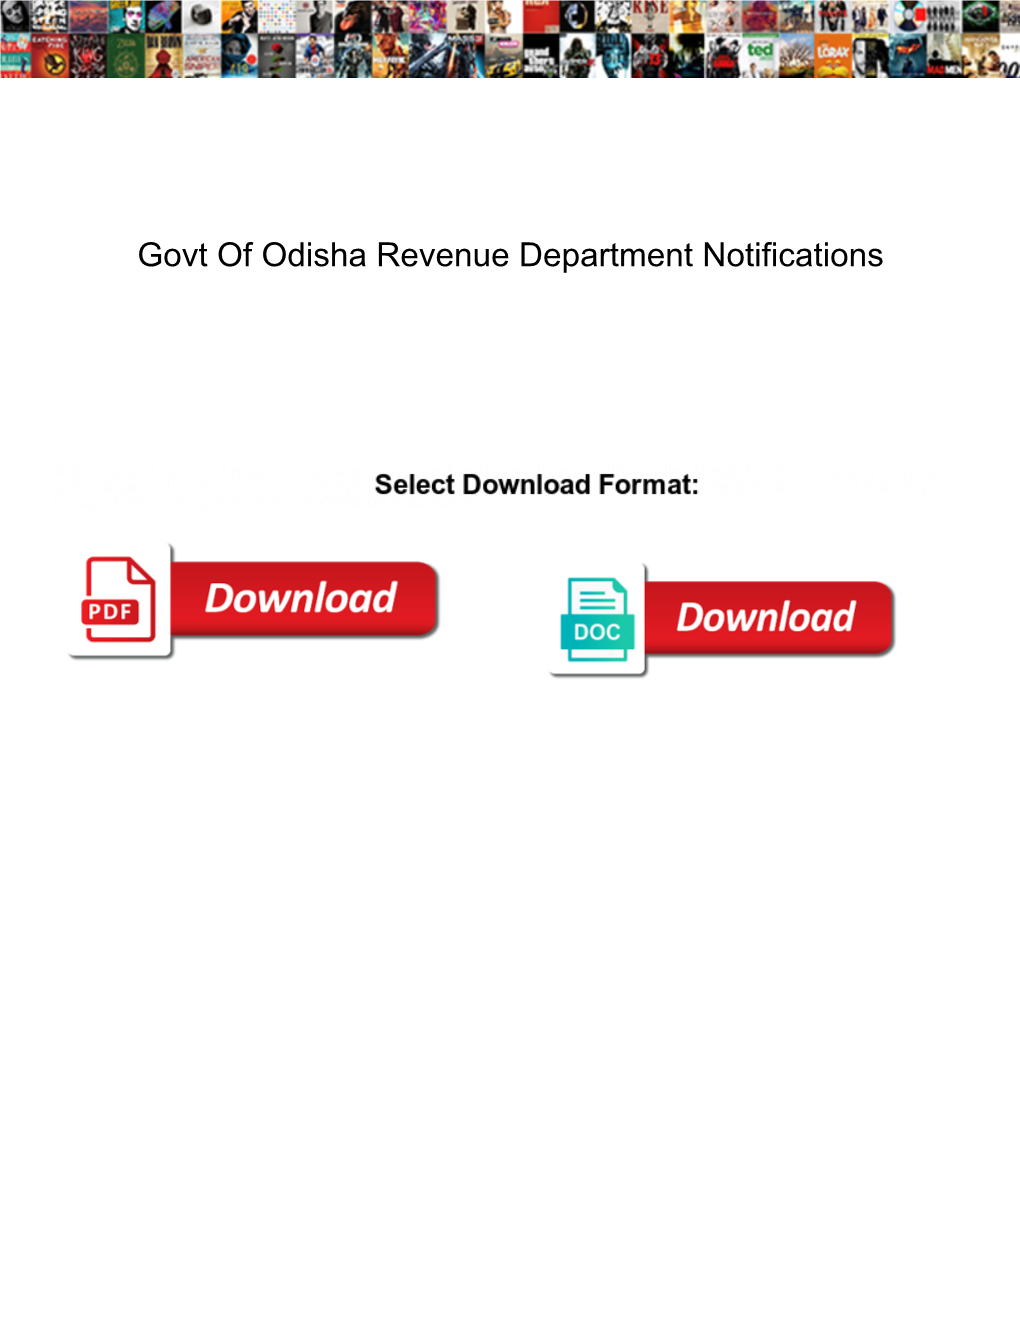 Govt of Odisha Revenue Department Notifications